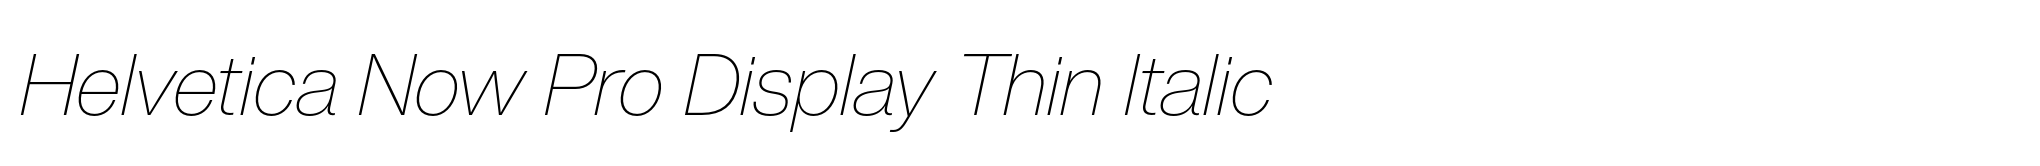 Helvetica Now Pro Display Thin Italic image